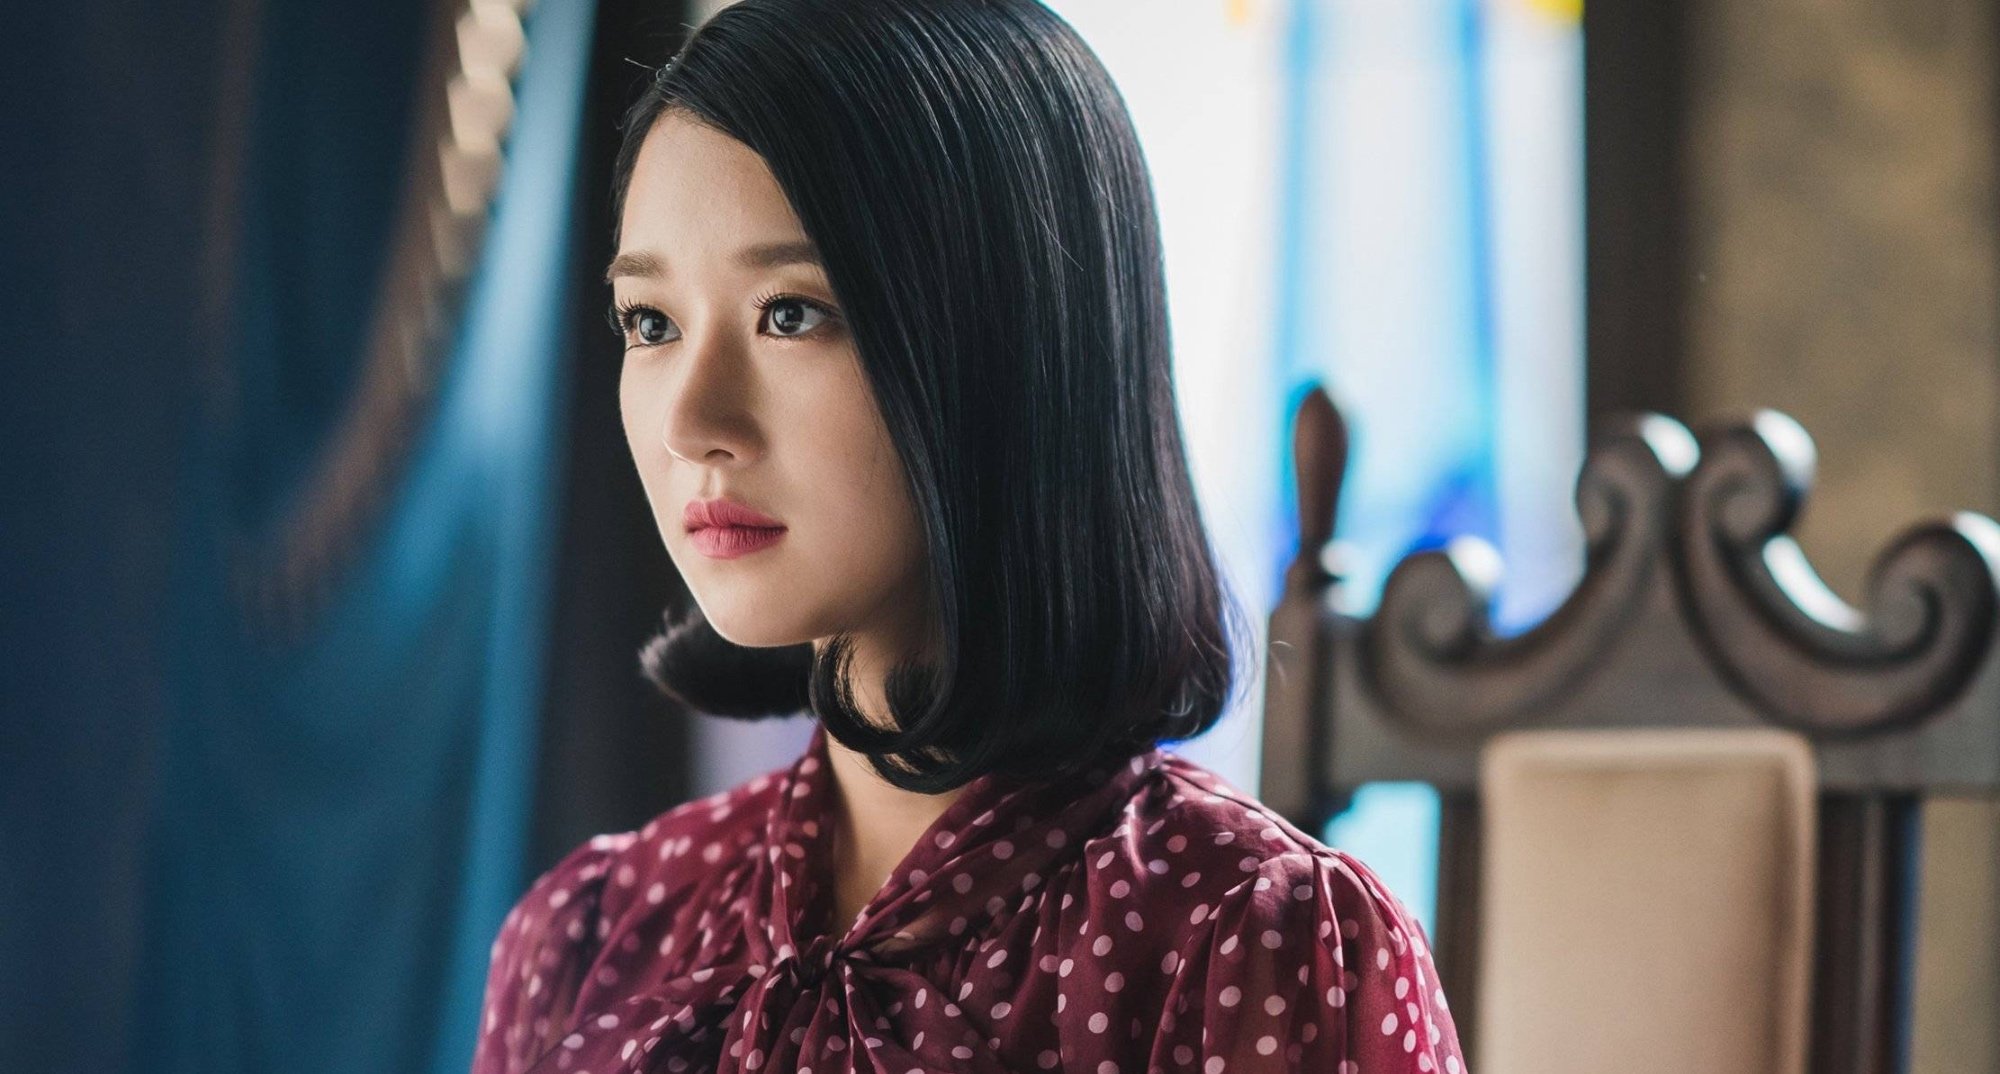 Seo Yea-ji in the tvN K-drama 'It's Okay to Not Be Okay' wearing a red dress.